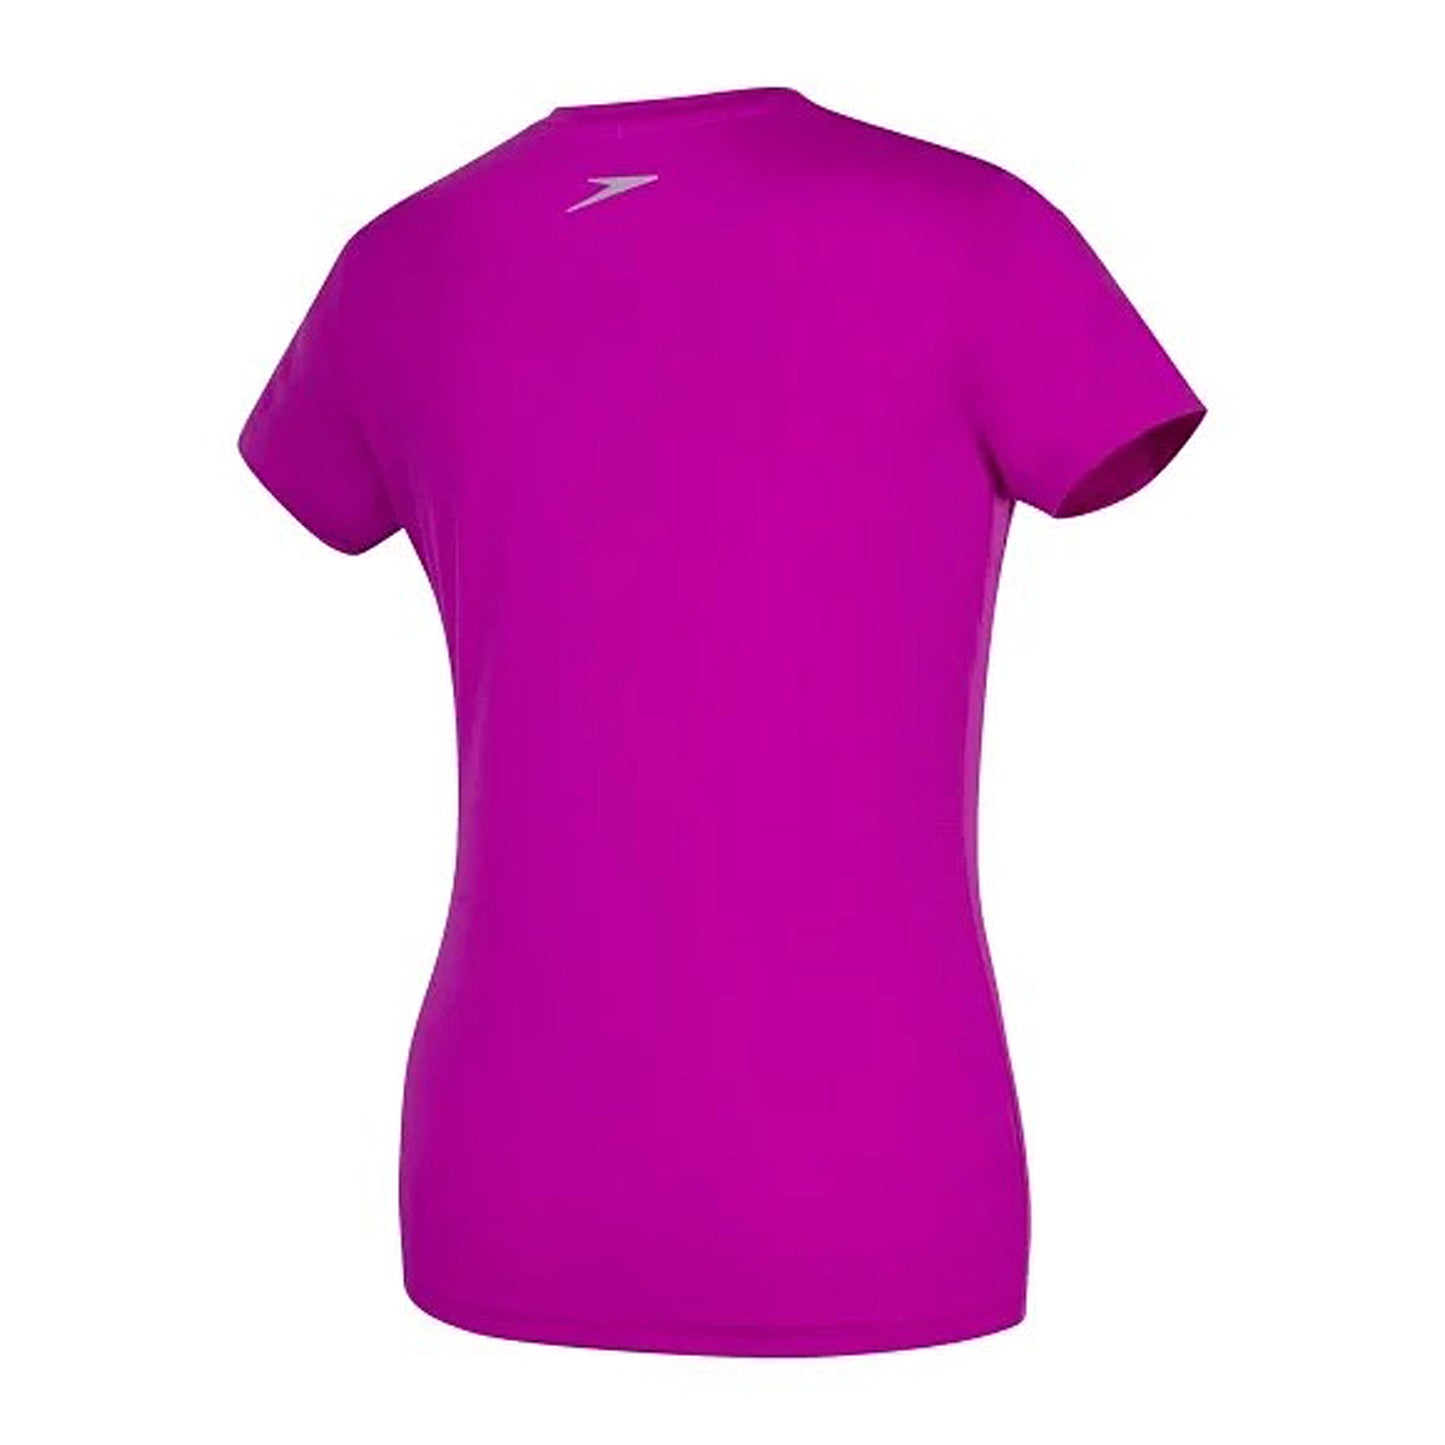 Speedo Short Sleeve Sun Top For Women (Diva/Silver) - Best Price online Prokicksports.com